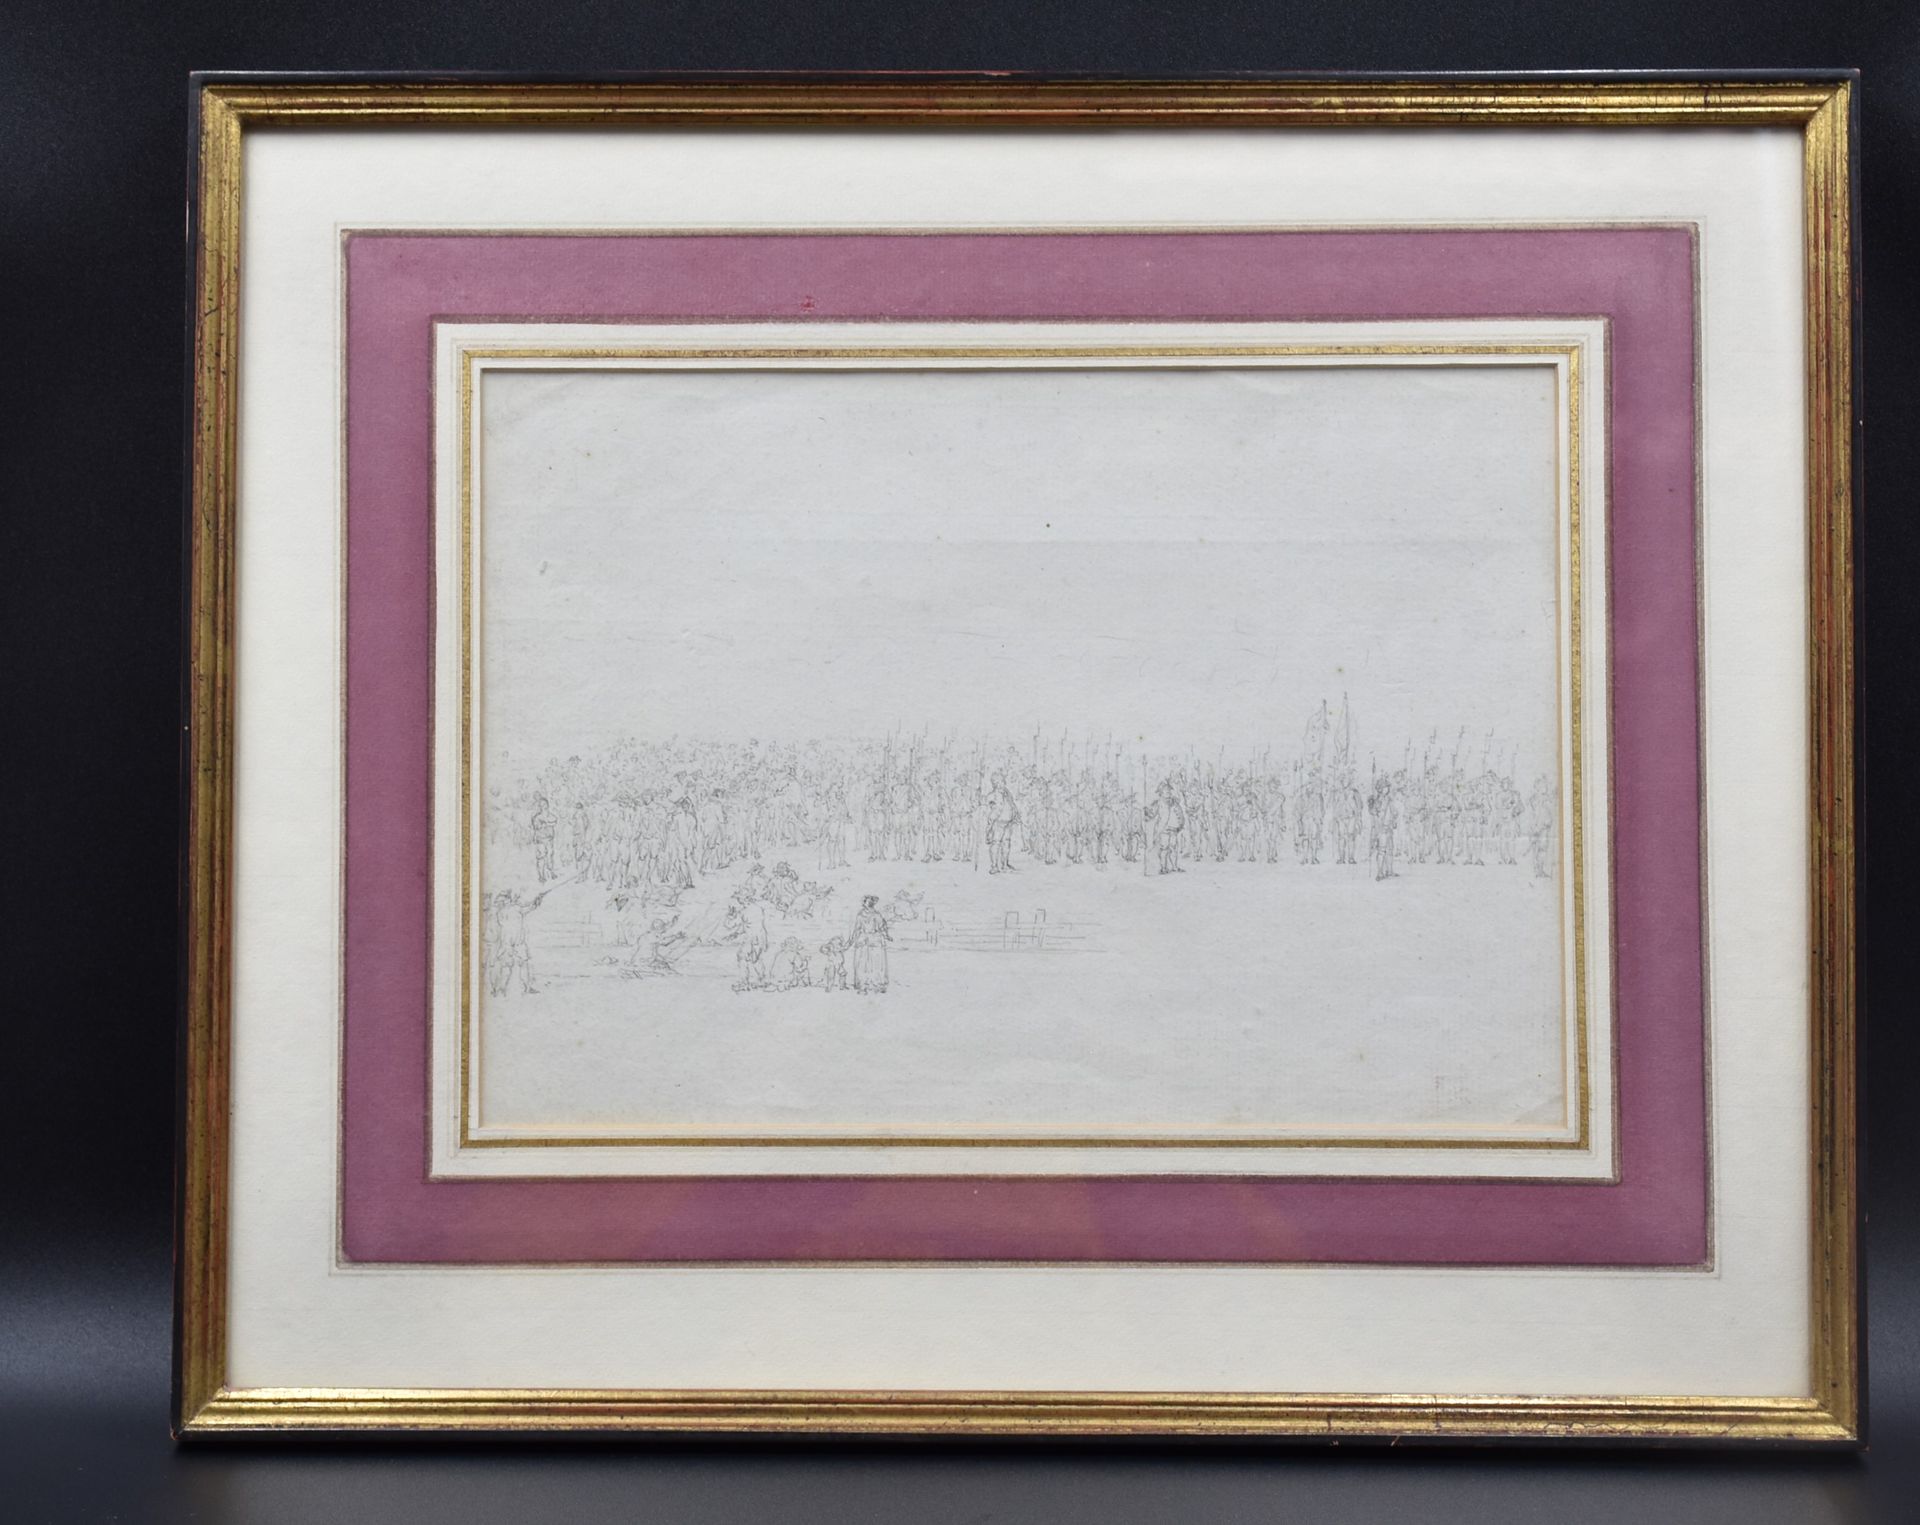 Null 19世纪初的铅笔画。阅兵式现场。尺寸：27 x 20厘米。